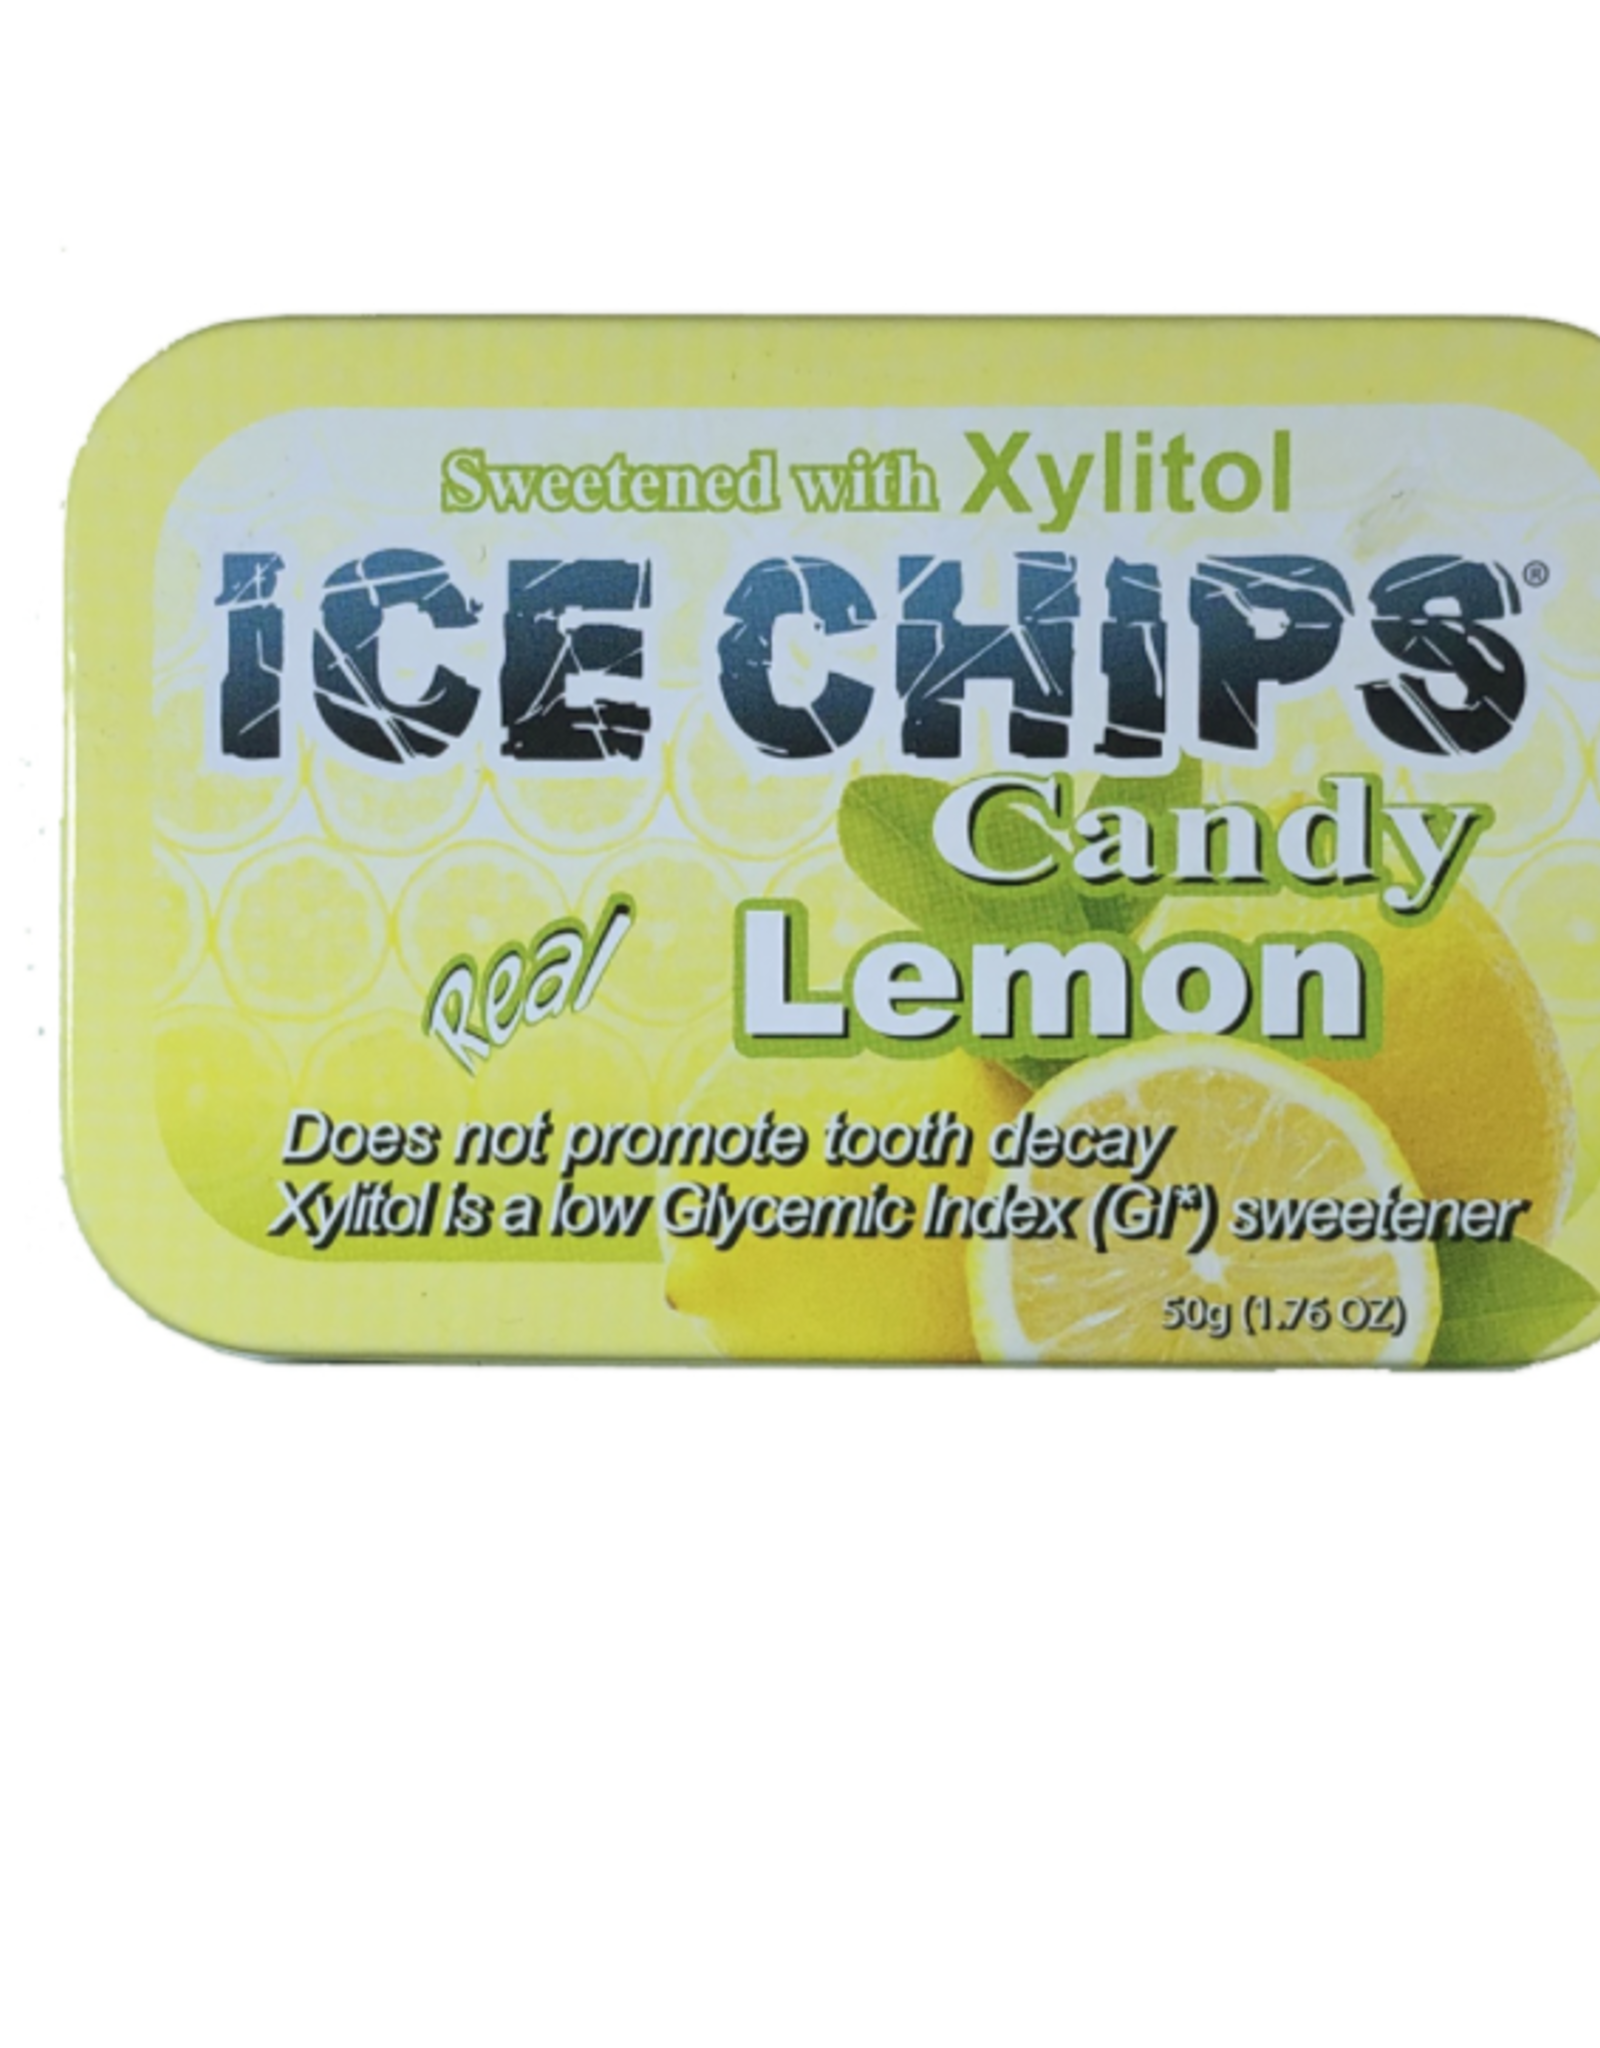 Ice Chips Ice Chips Lemon